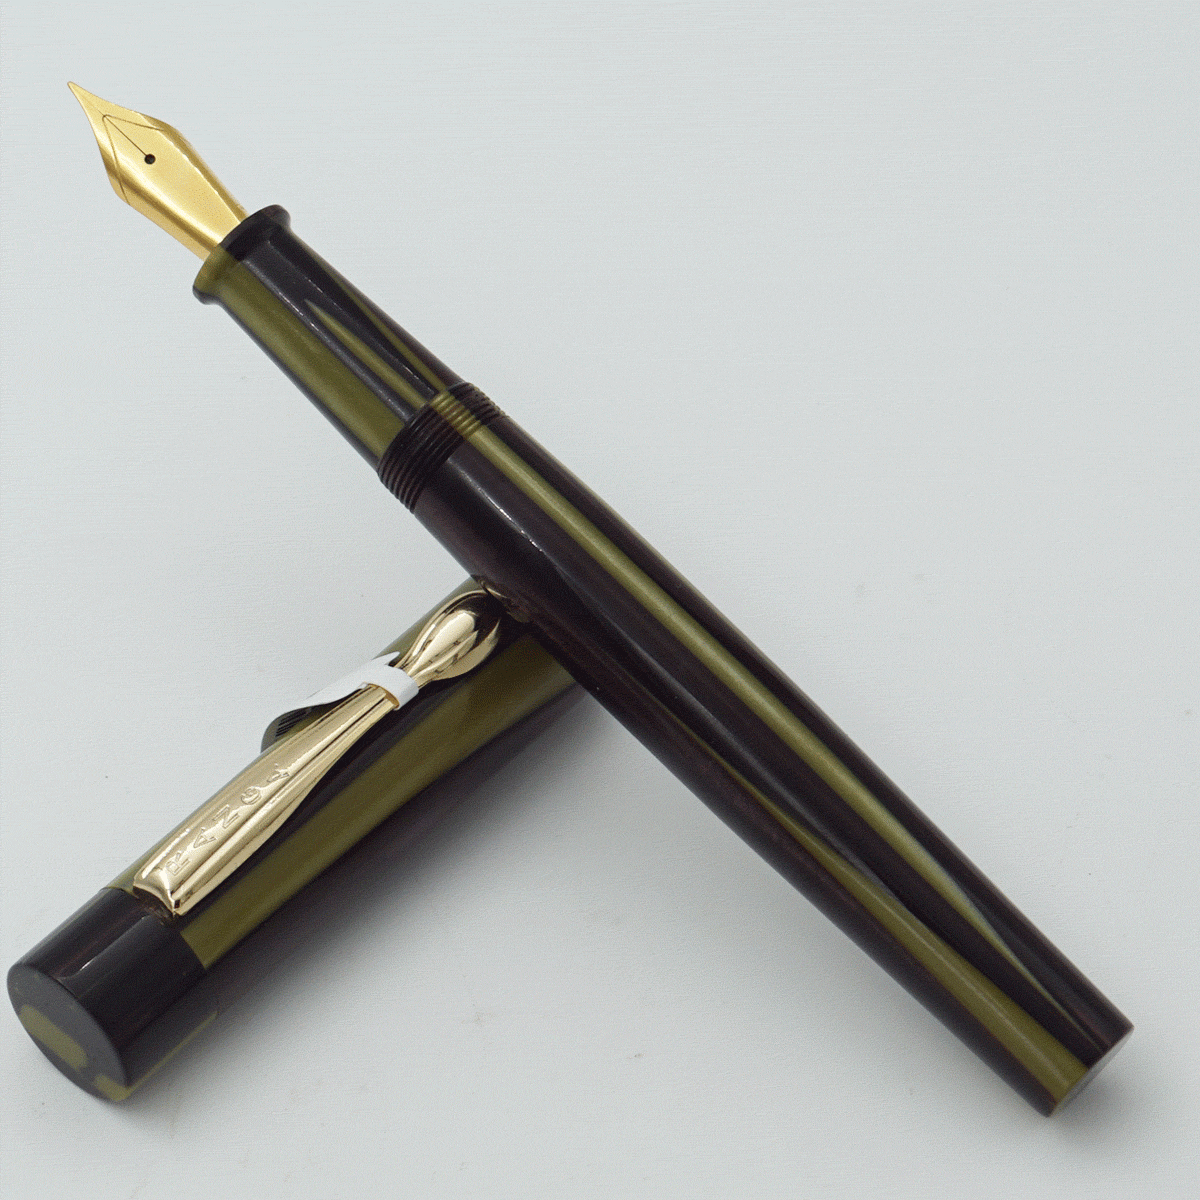 Ranga Handmade Model 3 Premium Acrylic P26 Olive Black Stripes Color Body With Golden Clip German Jowo Nib Converter Type Fountain Pen (Nib Can be Customized With Fine or Medium or Broad) SKU 24251